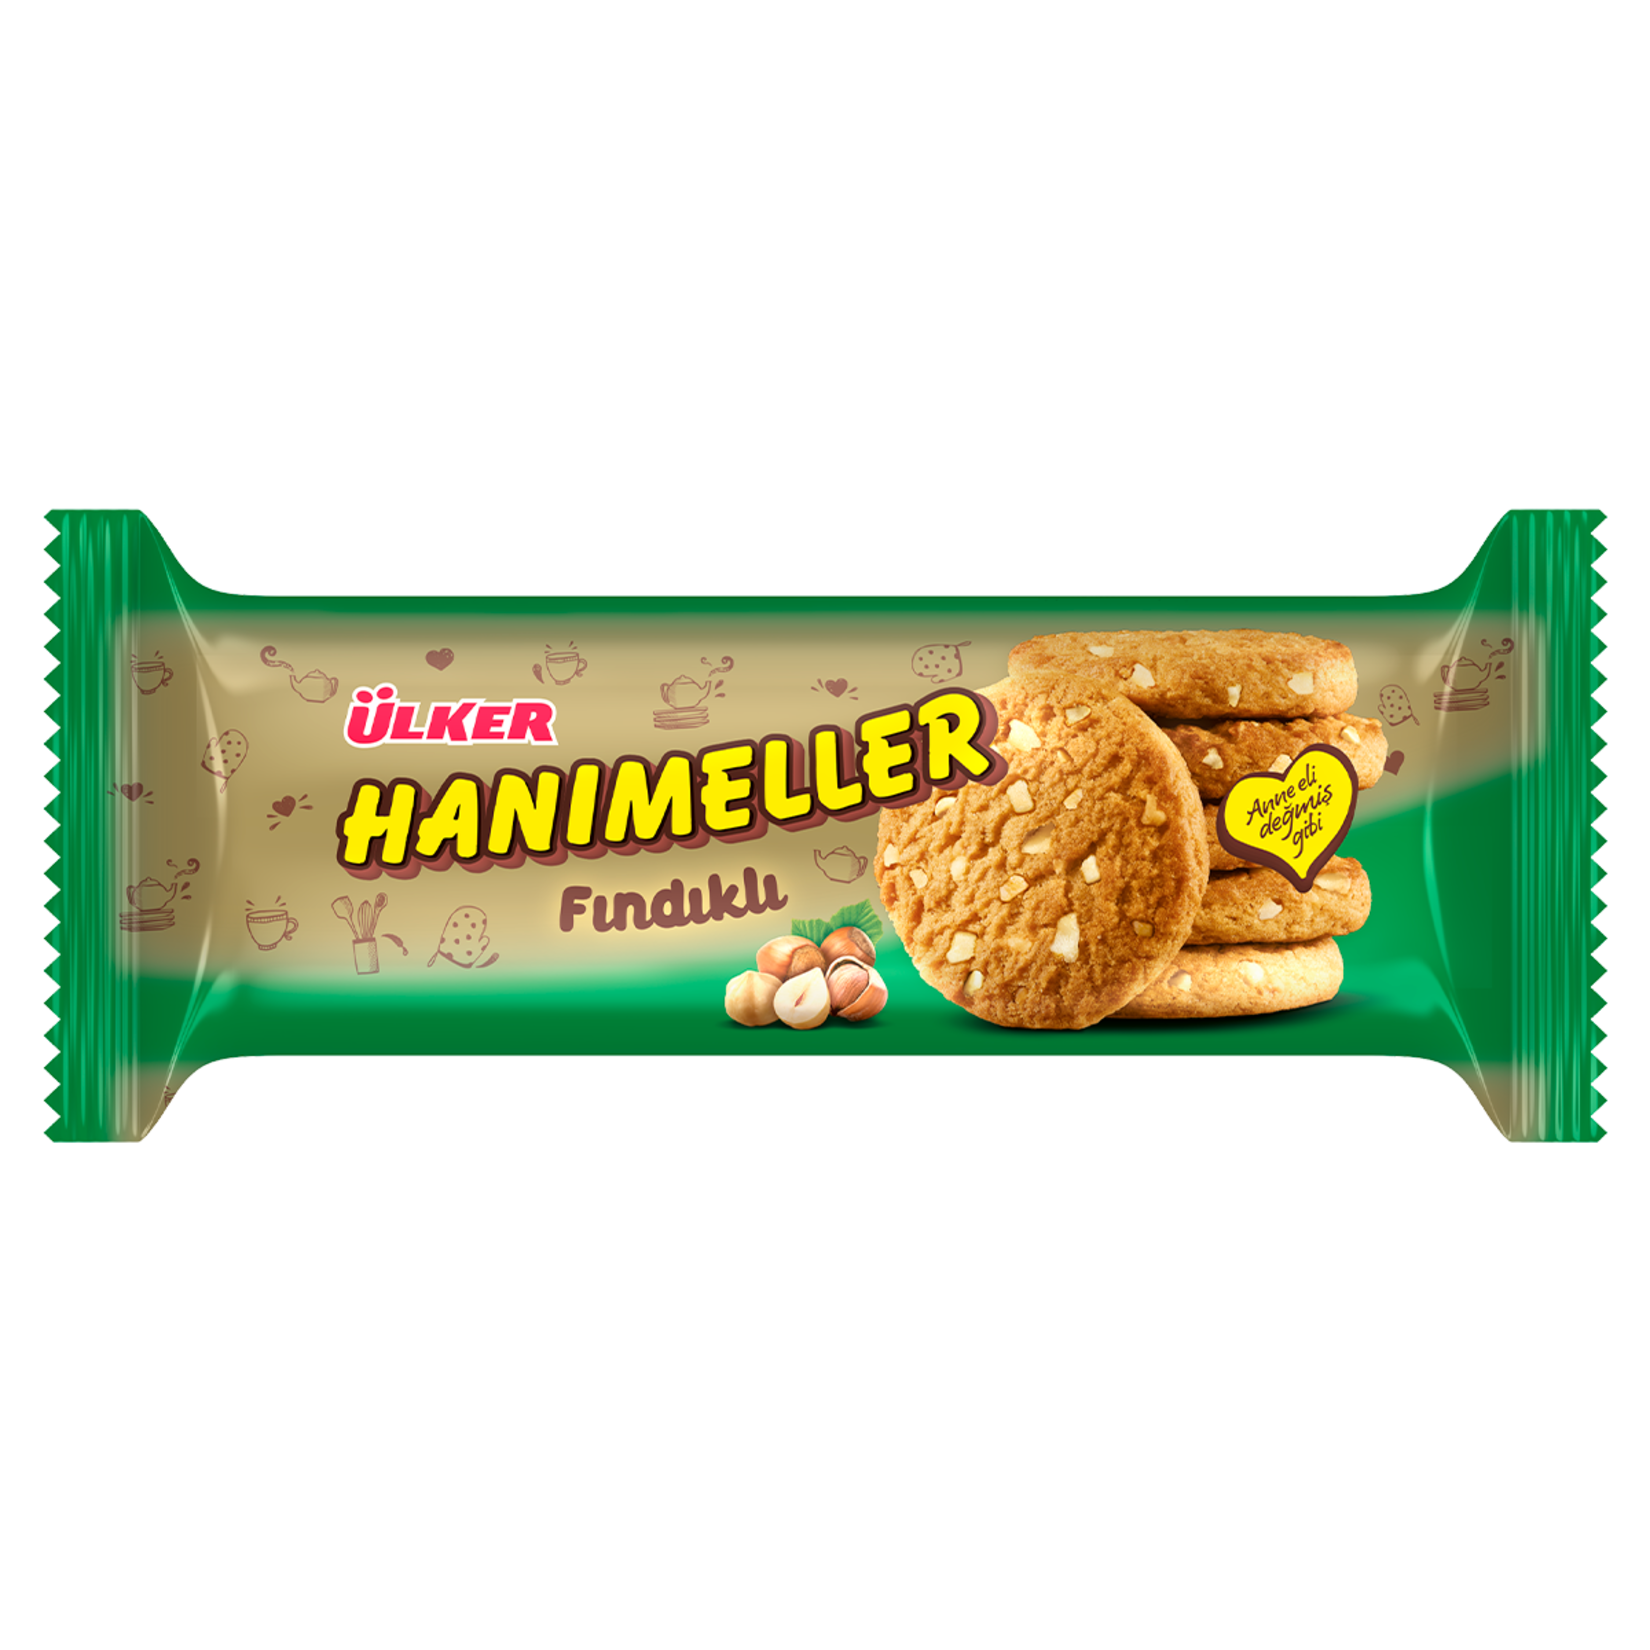 Ülker Hanimeller Findikli - Kekse mit gerösteten Haselnüssen 82g